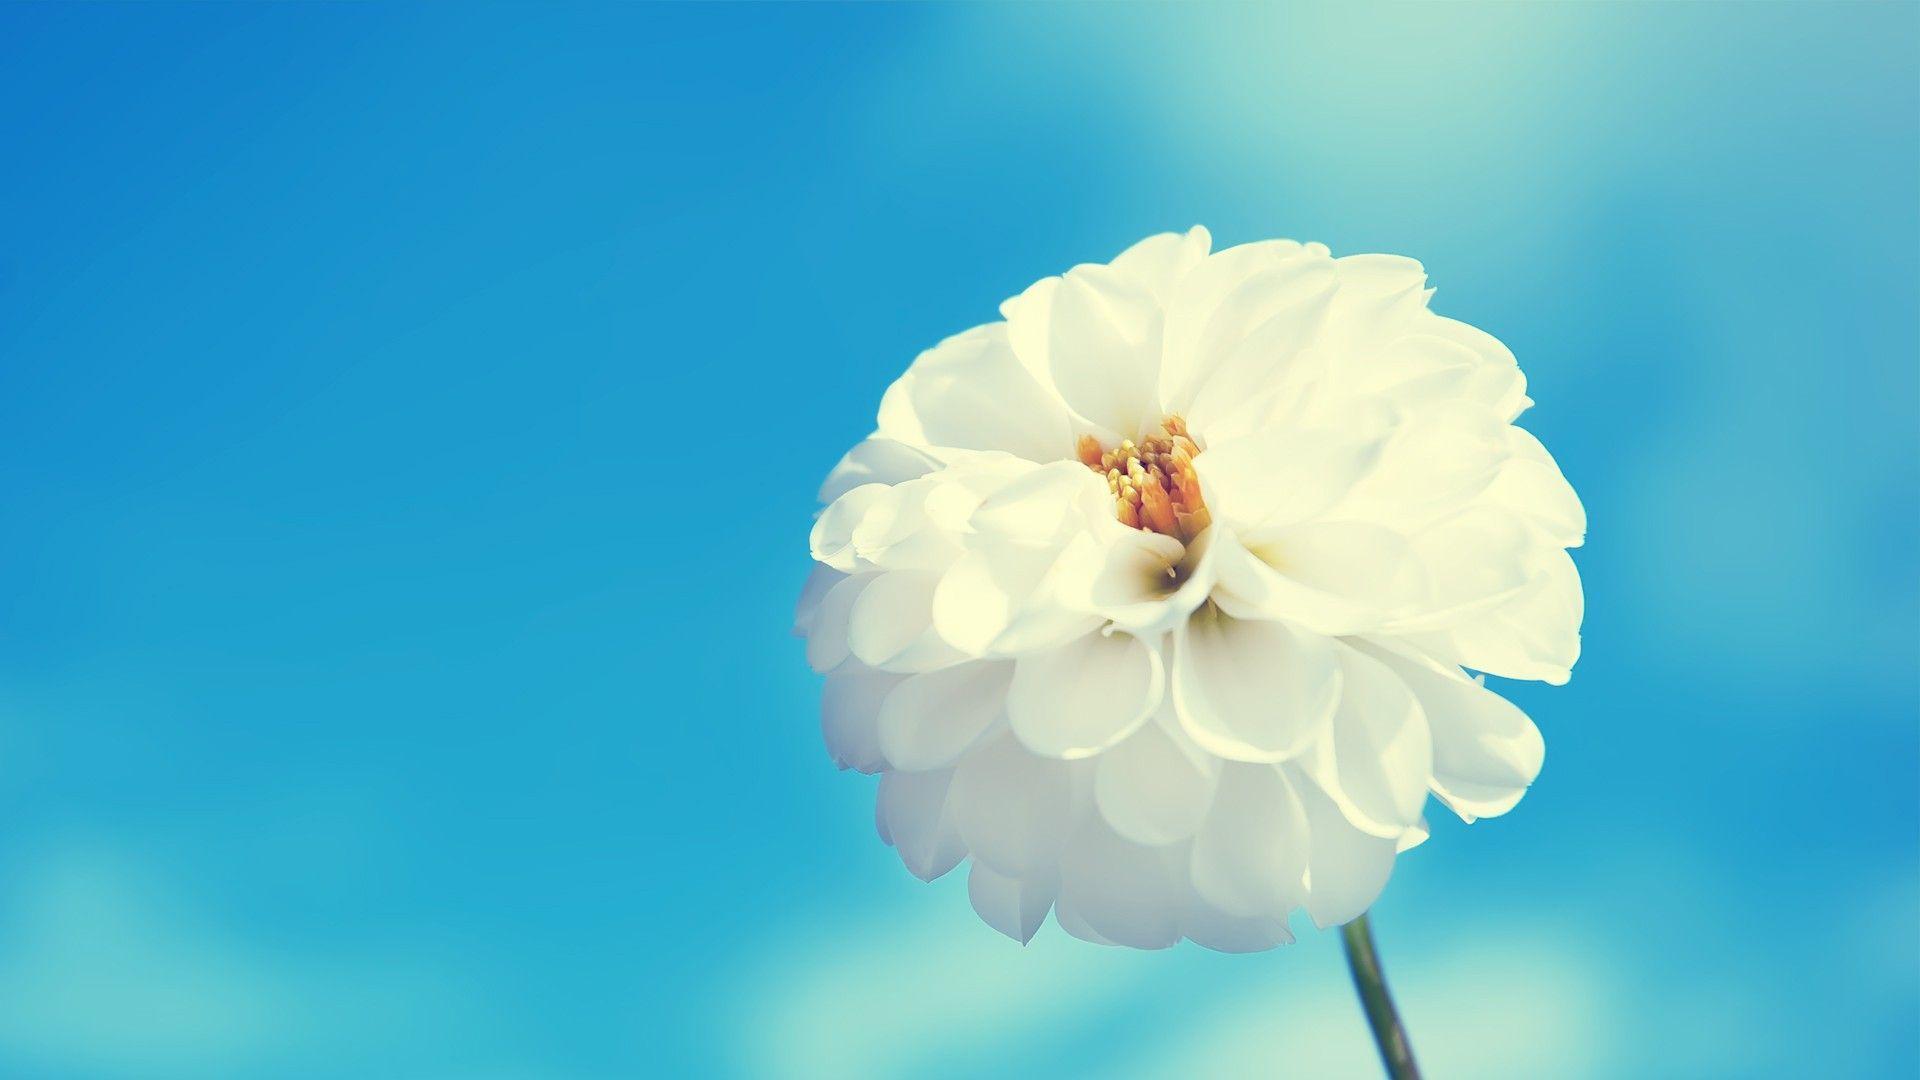 White Fowers HD Wallpaper. White Flowers Desktop Image. Cool